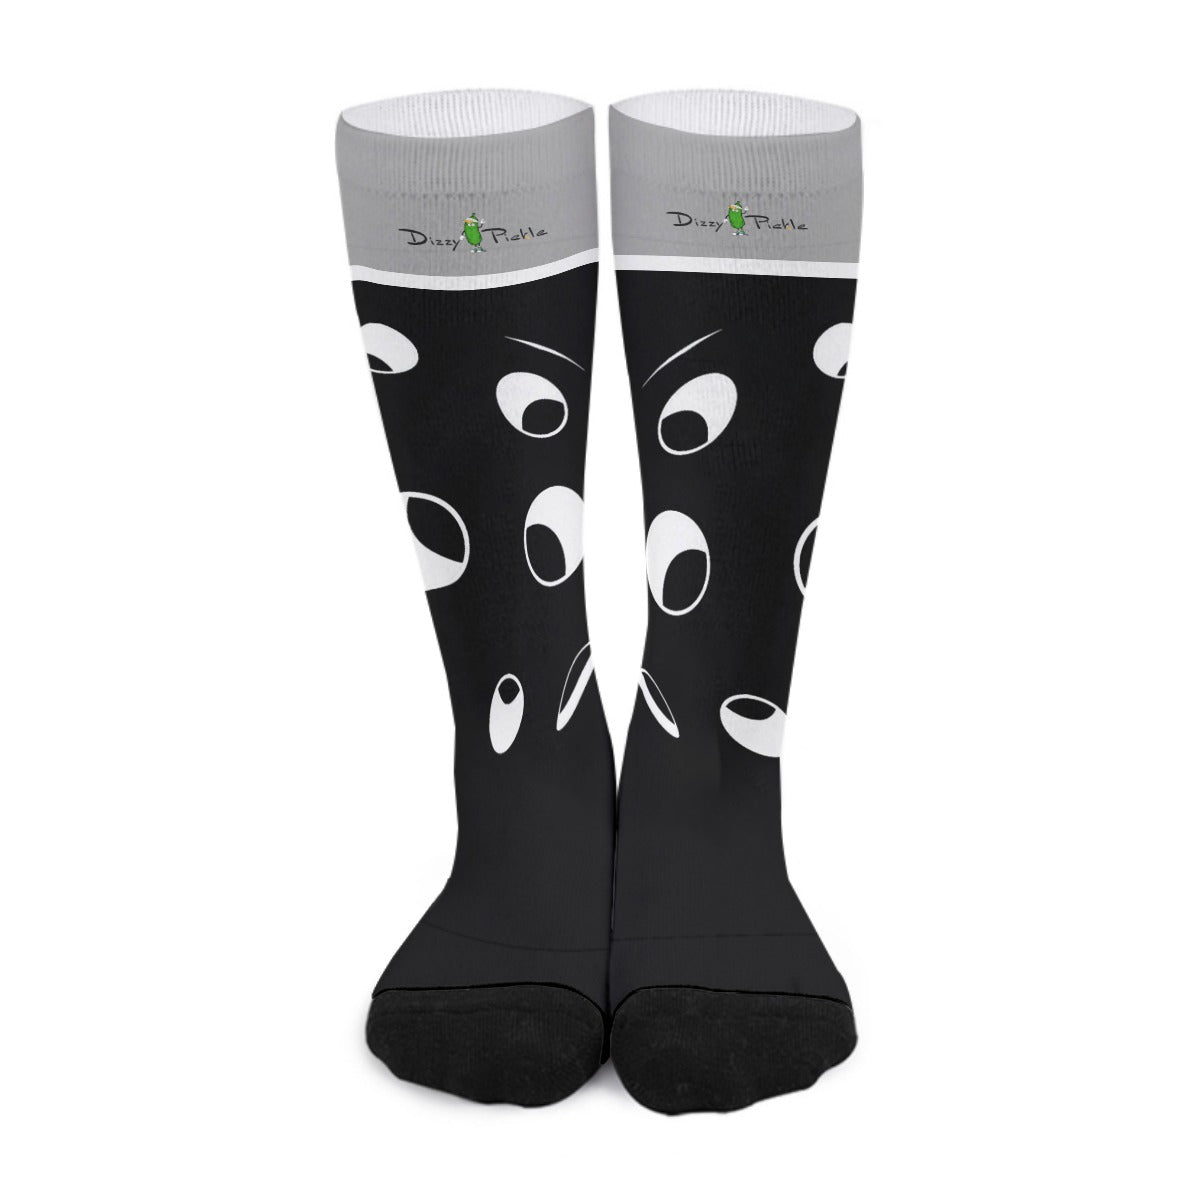 Lisa - BW - Pickleball Long Socks by Dizzy Pickle